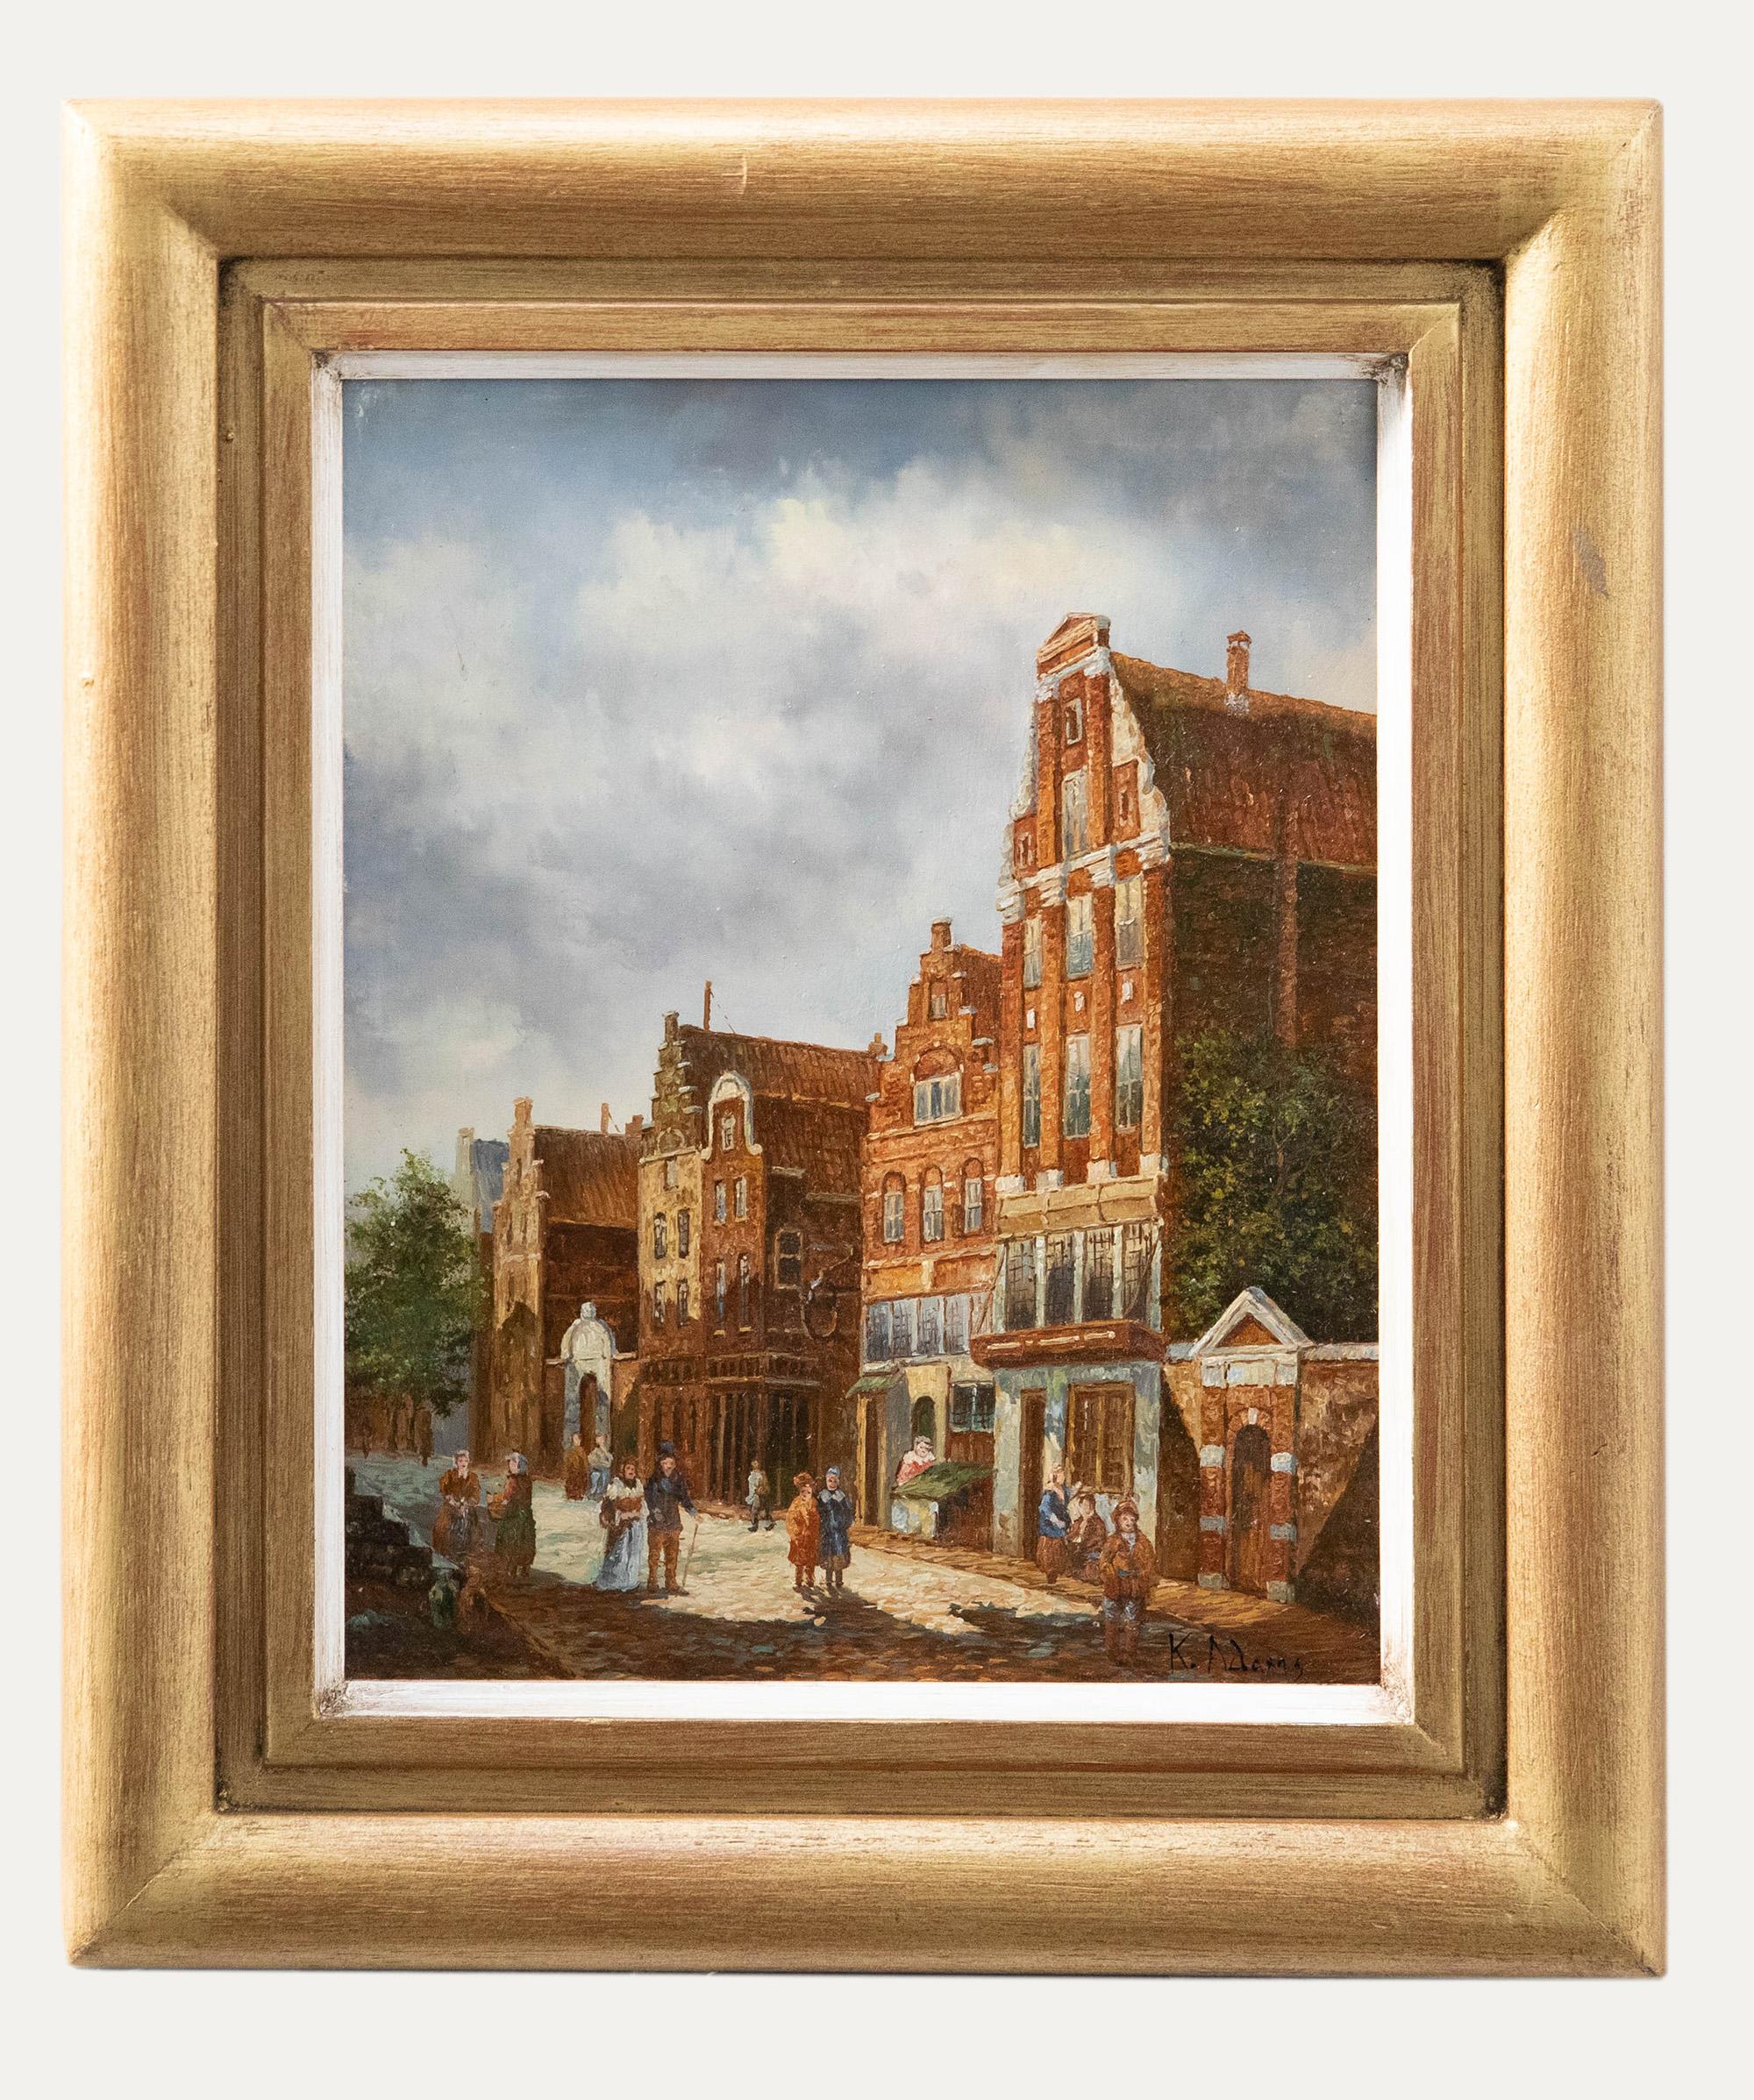 Unknown Figurative Painting - K. Adams - Framed 20th Century Oil, Dutch Town Scene